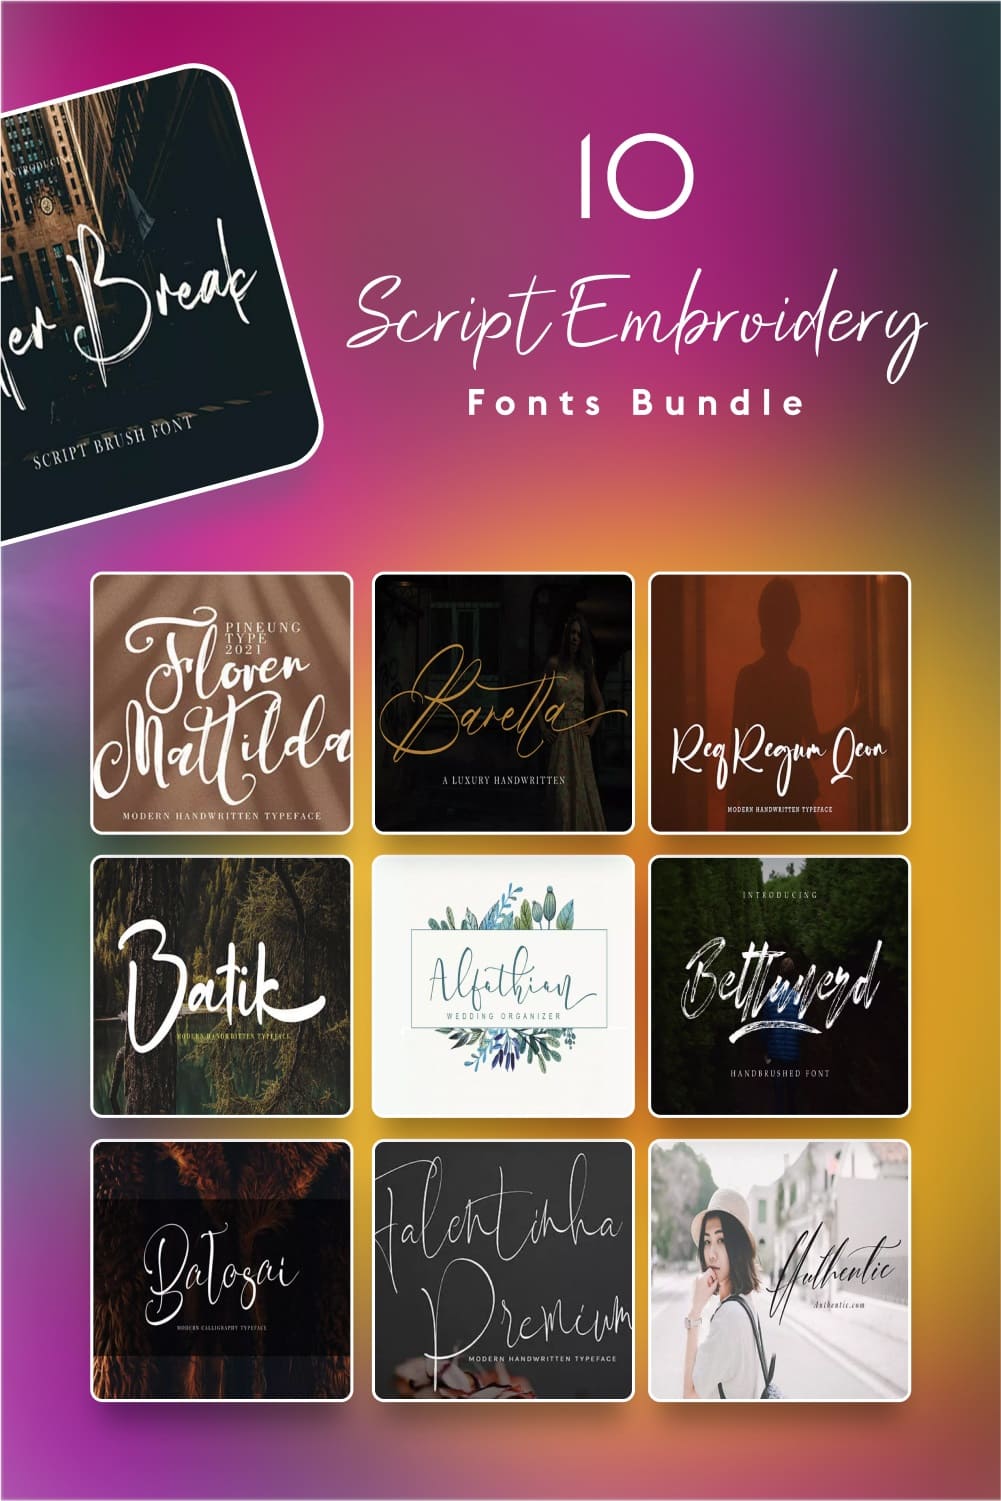 Script embroidery fonts bundle Pinterest collage image.